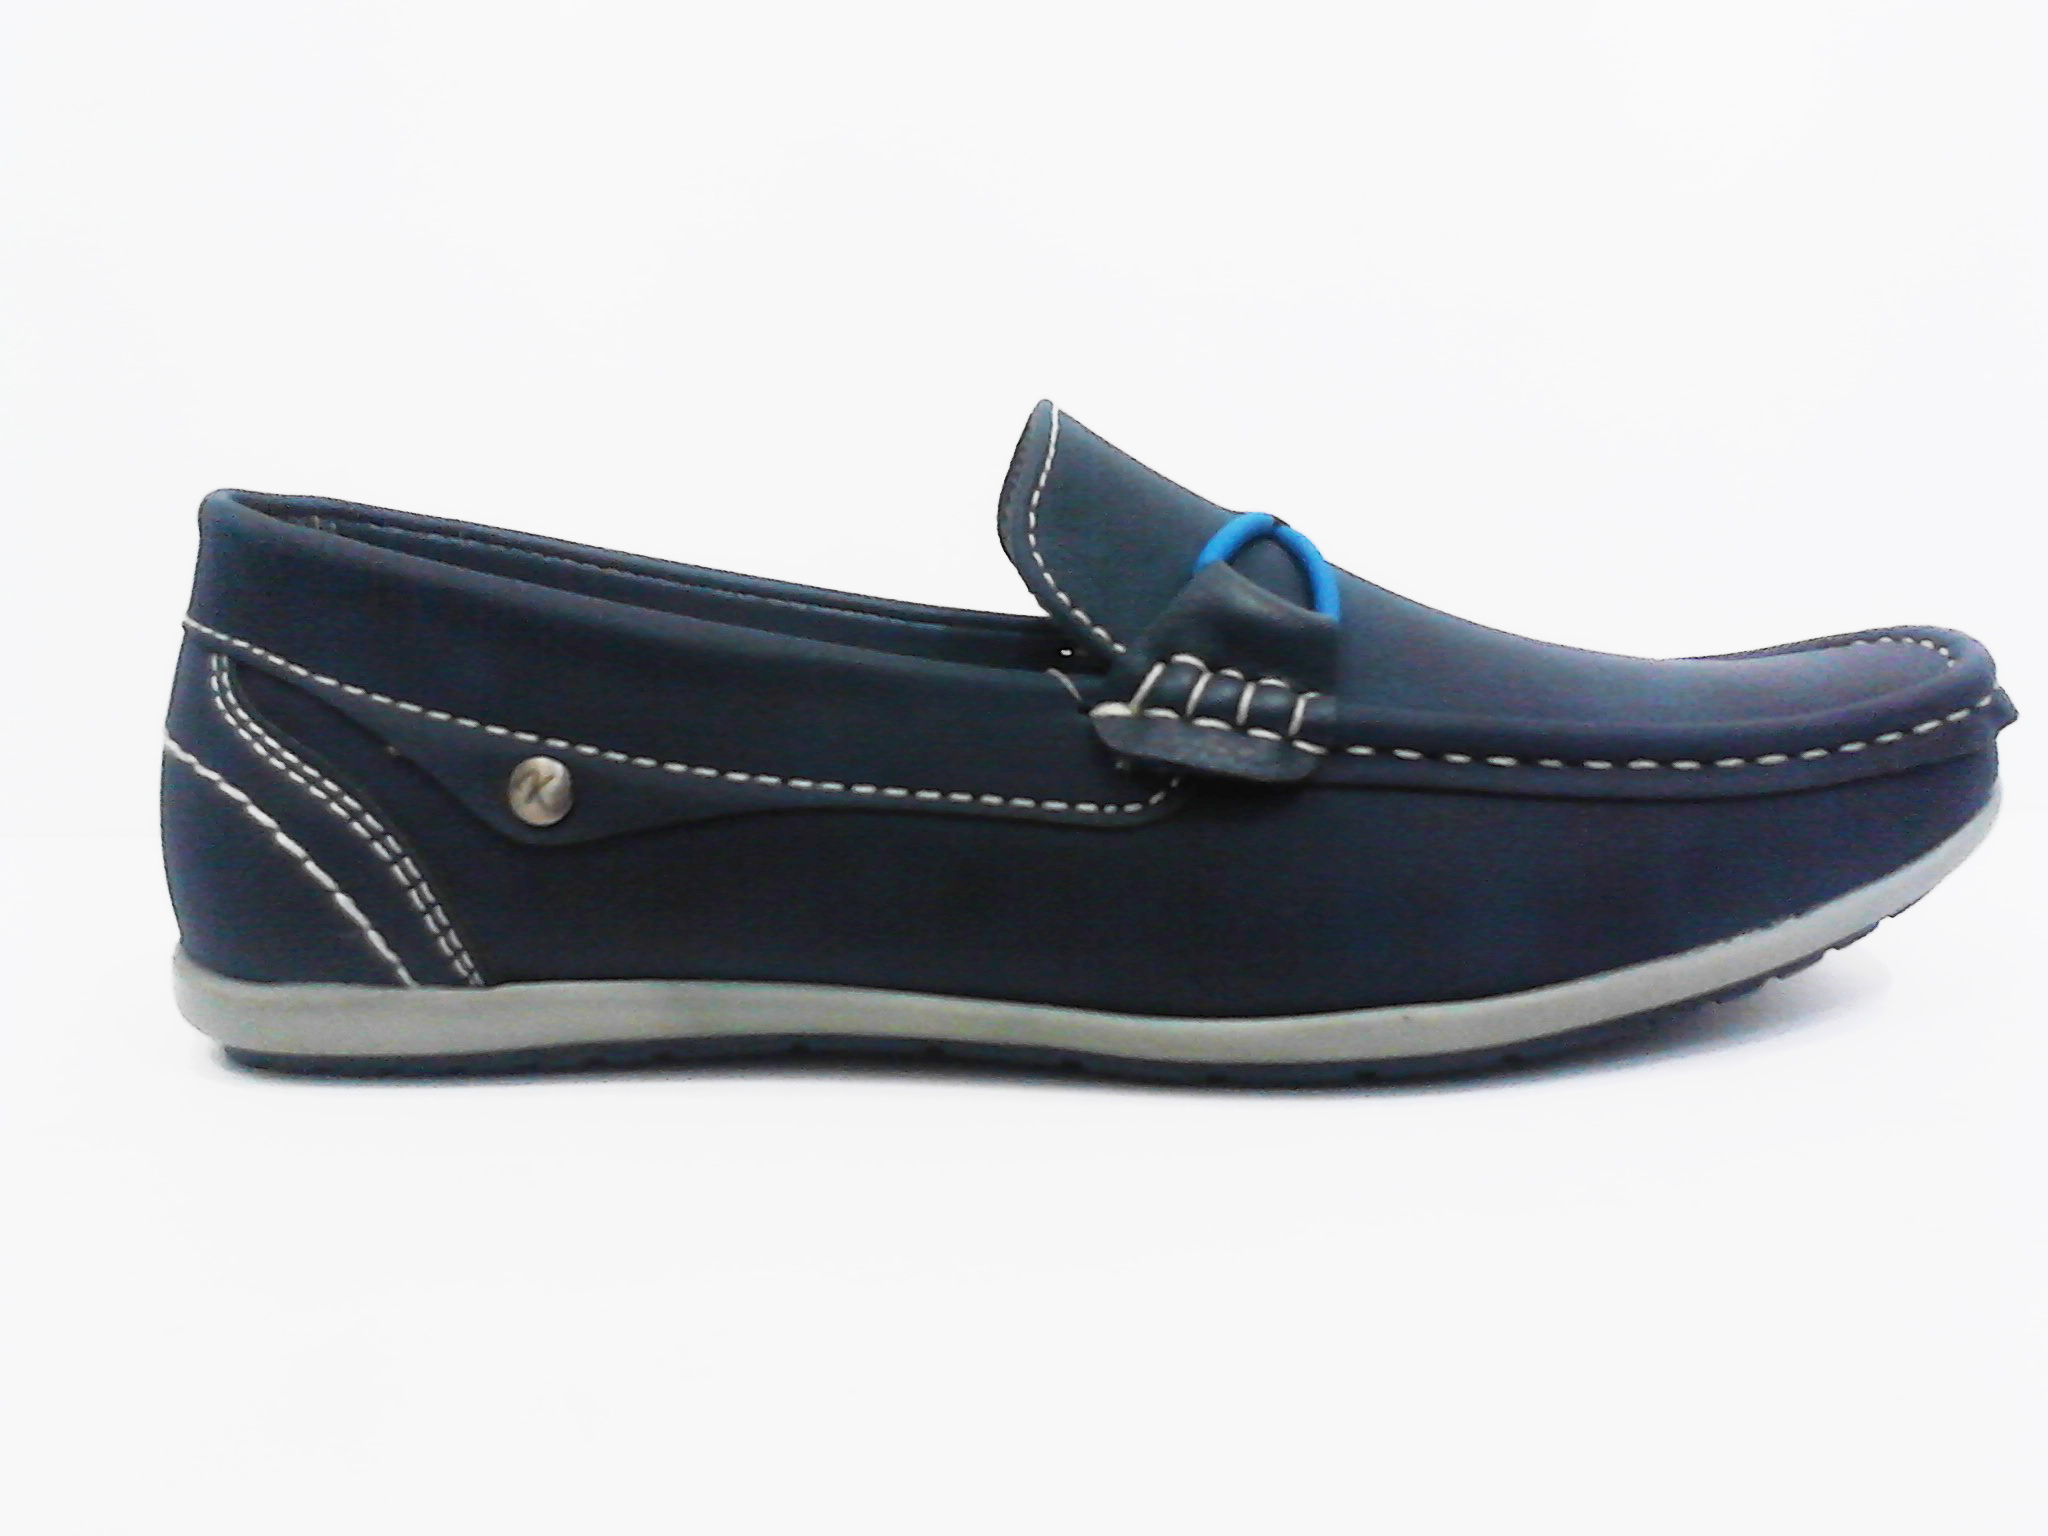 Buy Men Lofer Shoes Blue-K Walk Online @ ₹820 from ShopClues